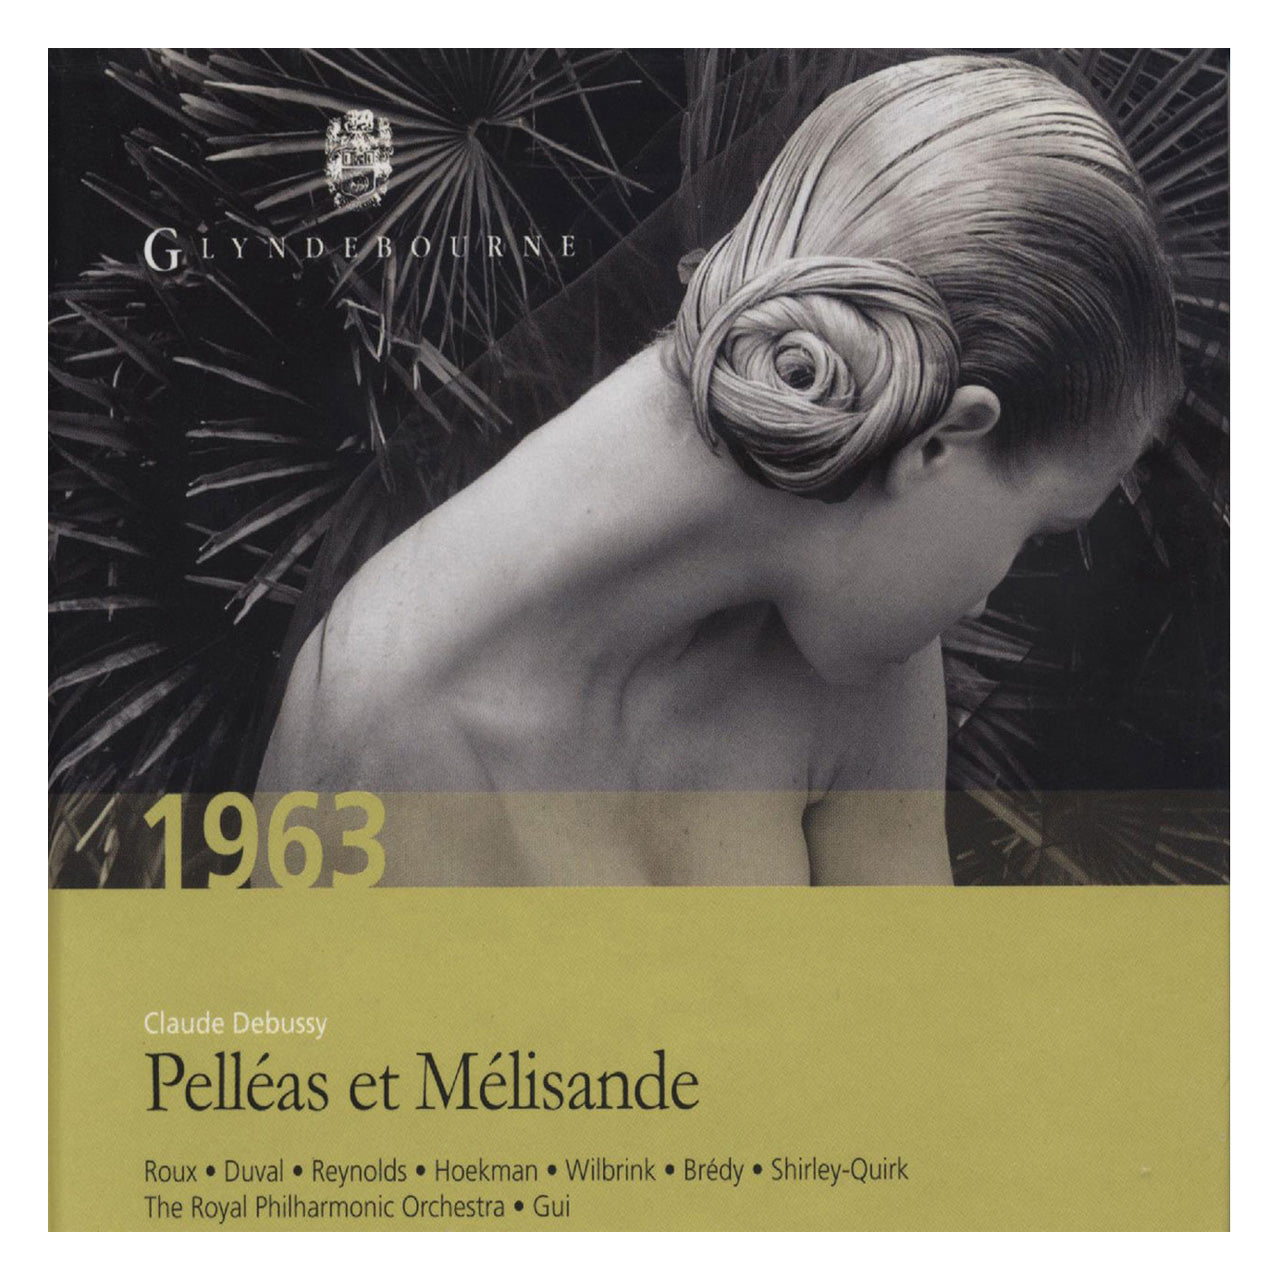 Pelléas et Mélisande CD 1963 